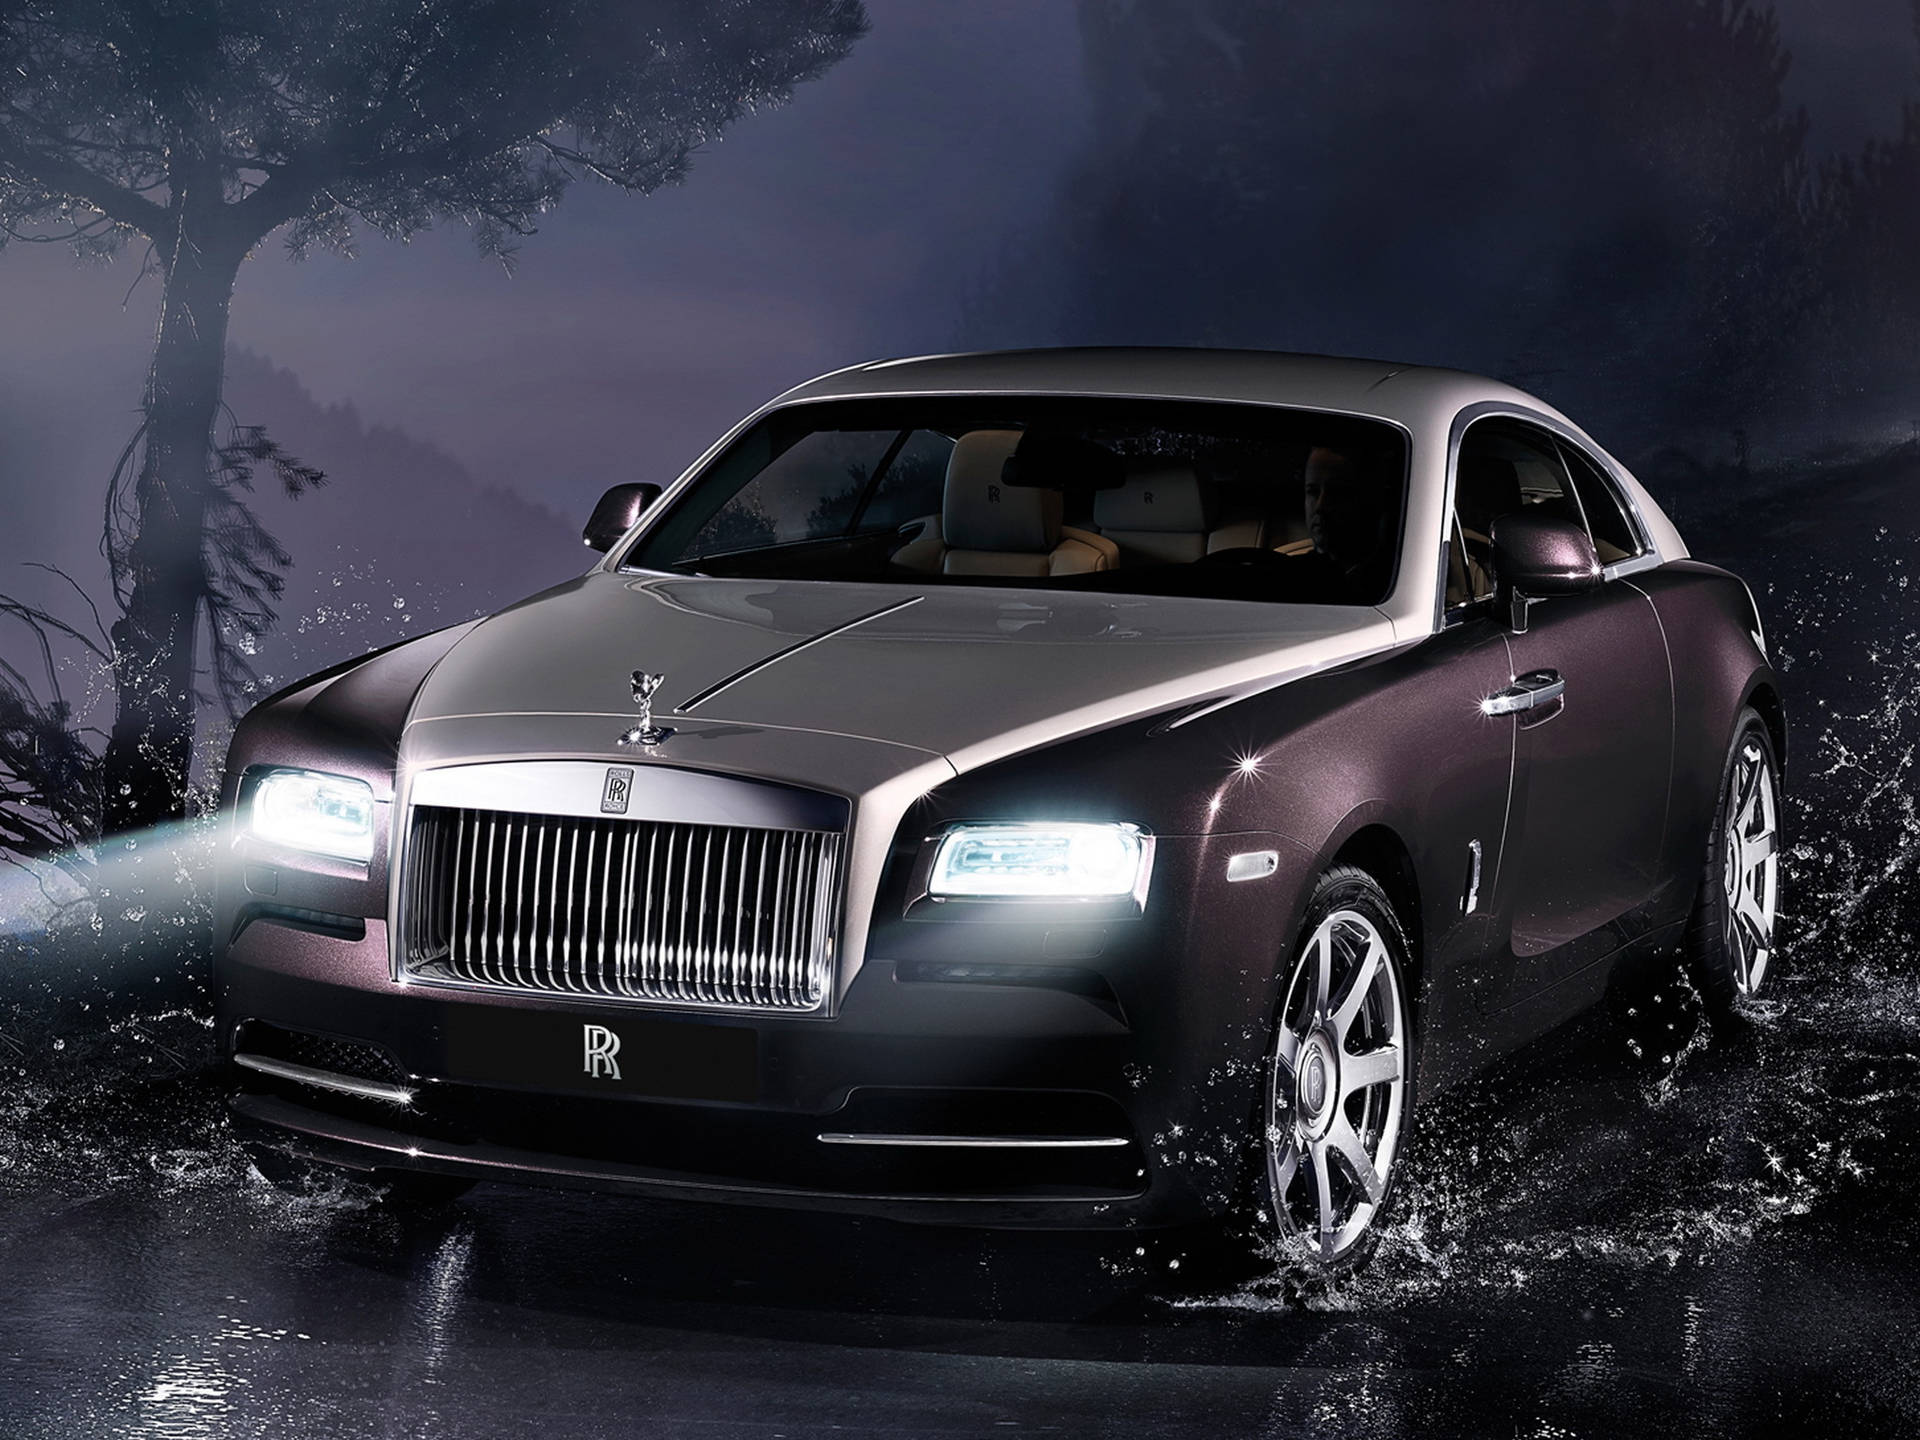 Rolls Royce Wraith Under Night Sky Background